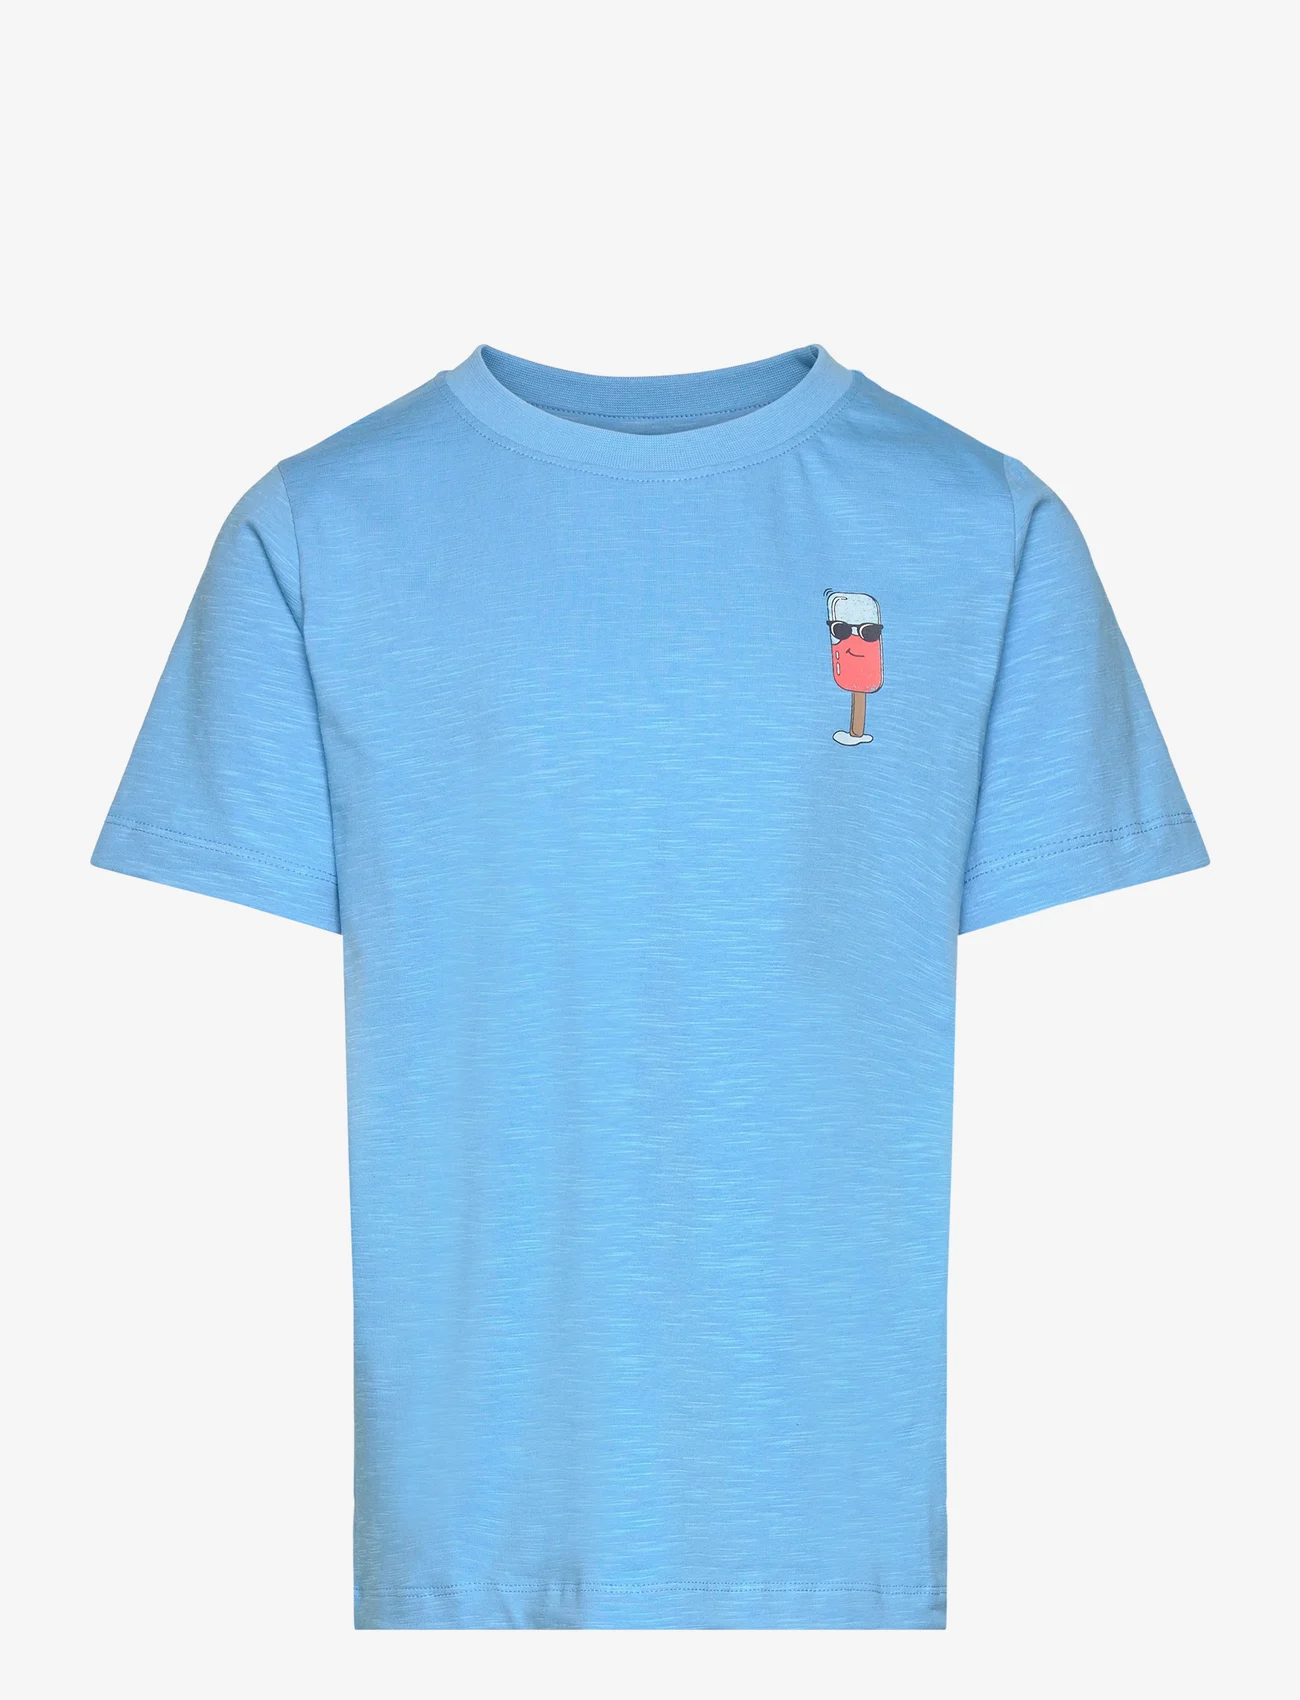 Minymo - T-shirt SS - korte mouwen - bonnie blue - 0